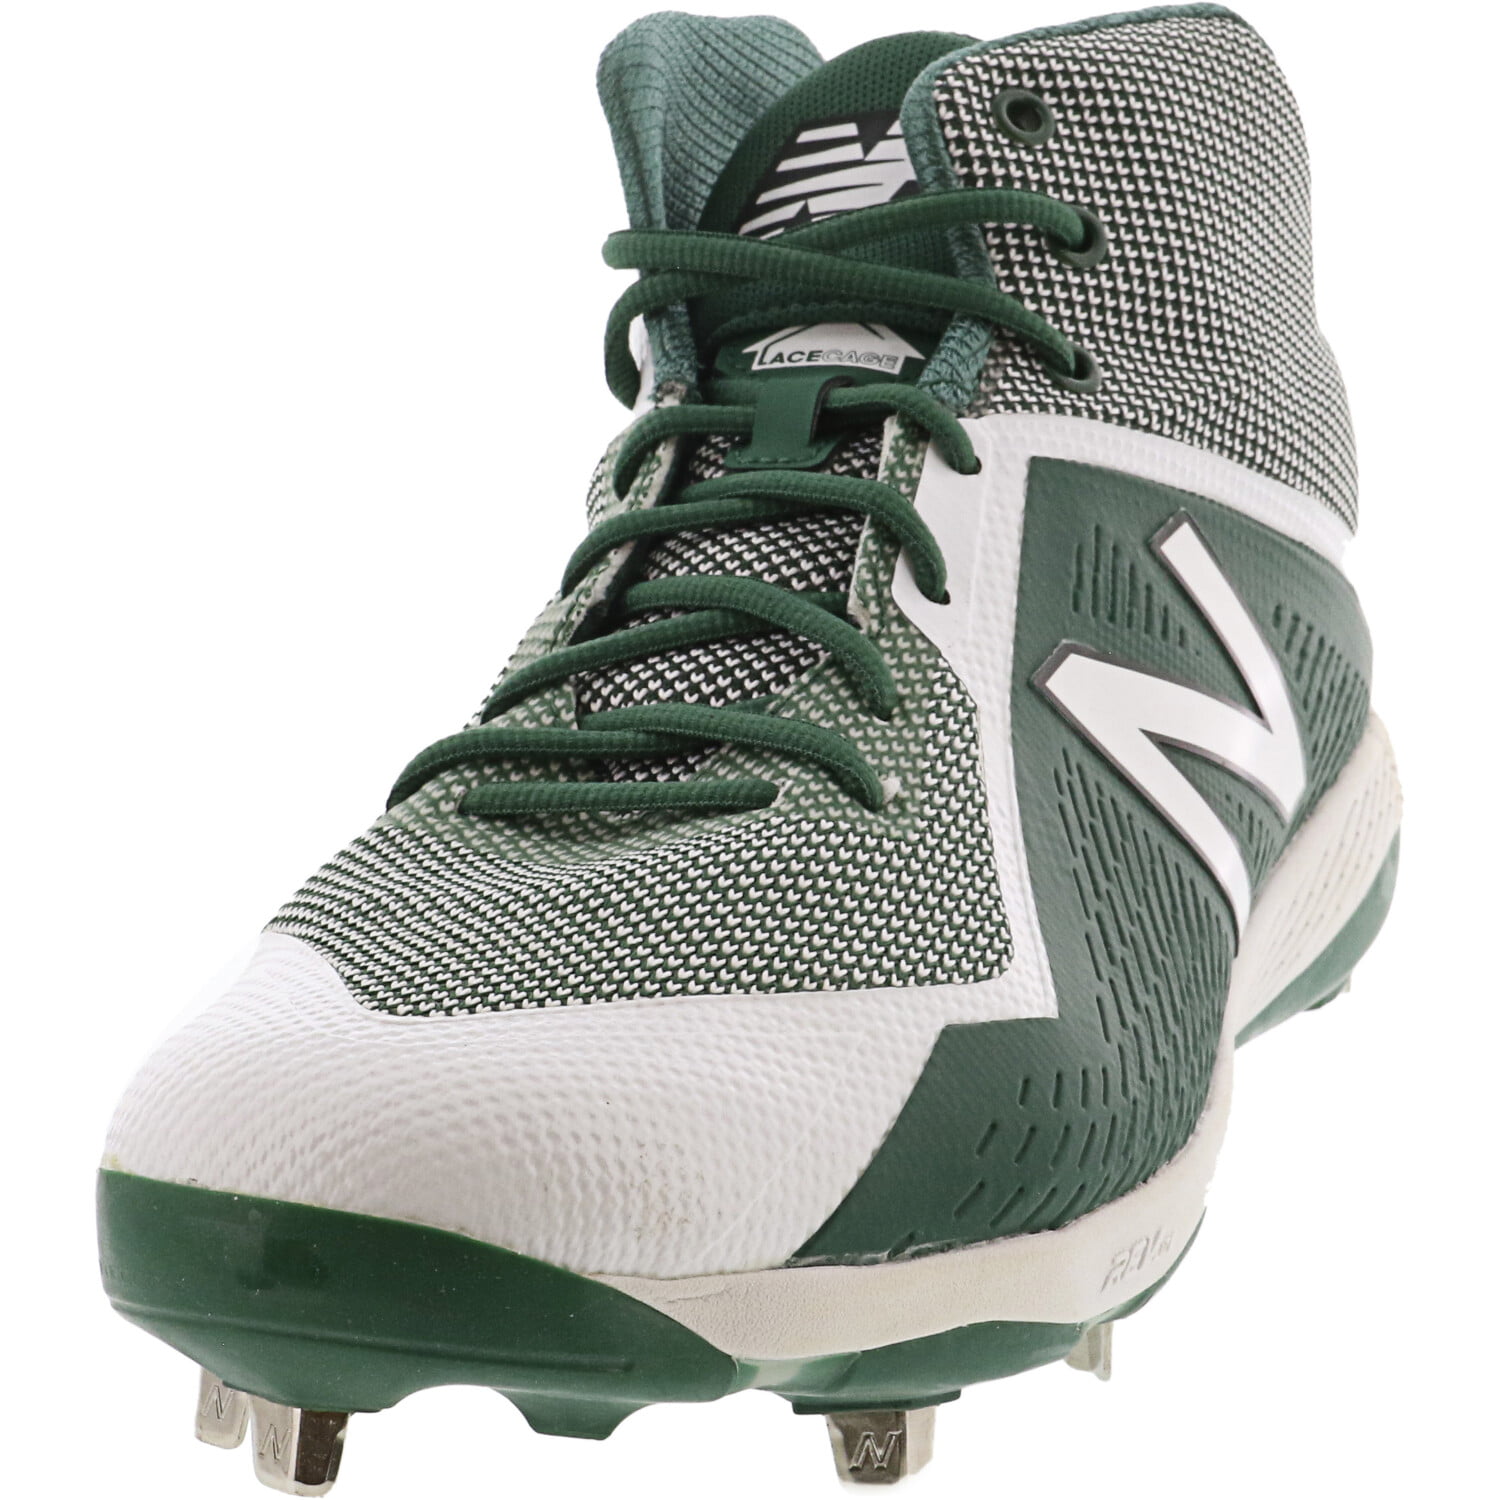  New  Balance  Mid Cut 4040v4 Metal Baseball Cleat  Mens Shoes  